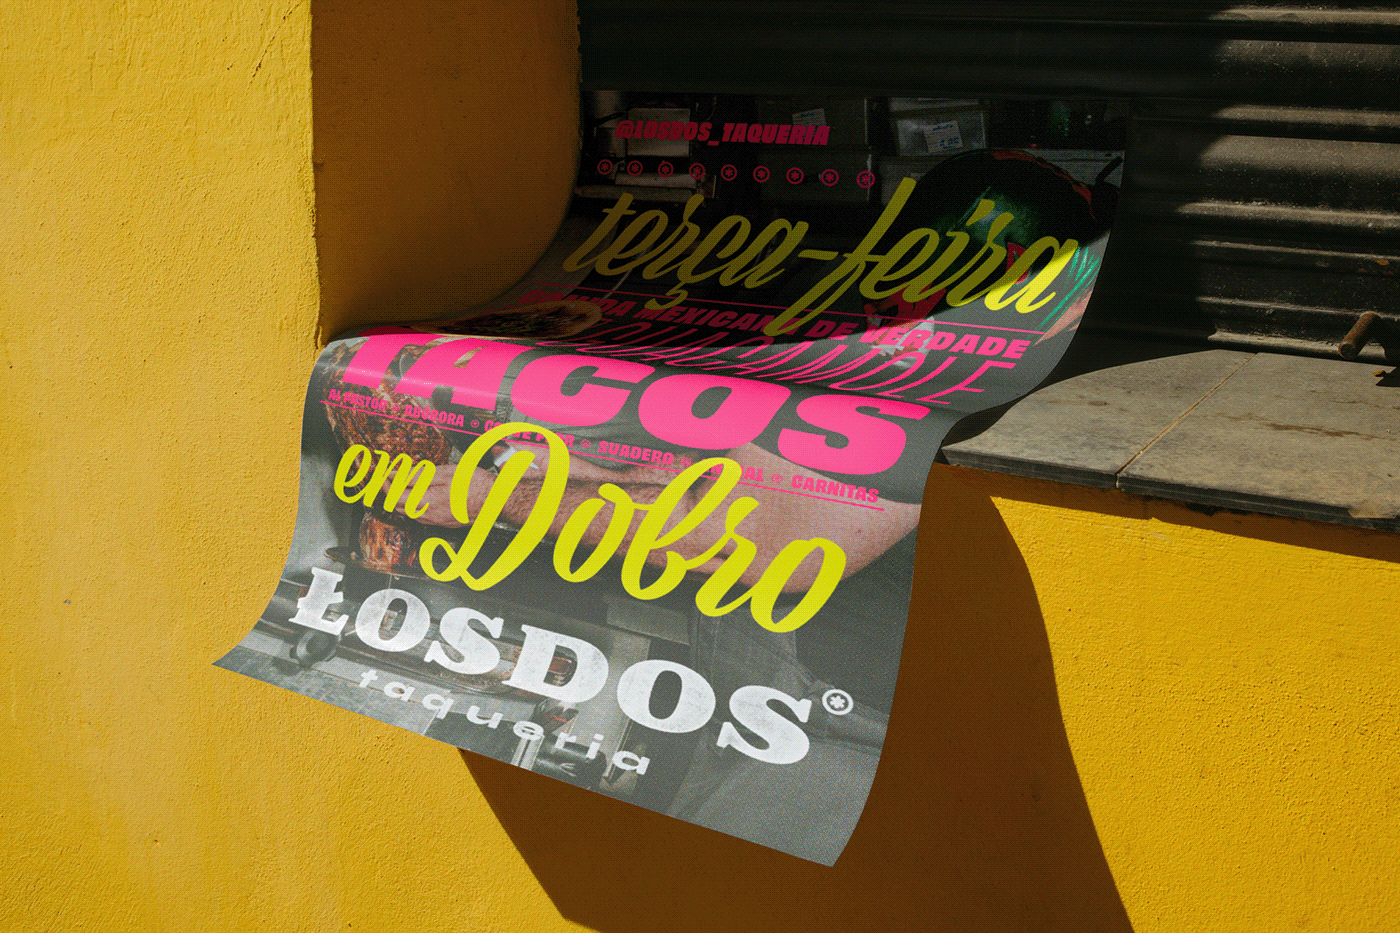 losdos tacos restaurant branding in sao paulo, brazil by ADD Branding